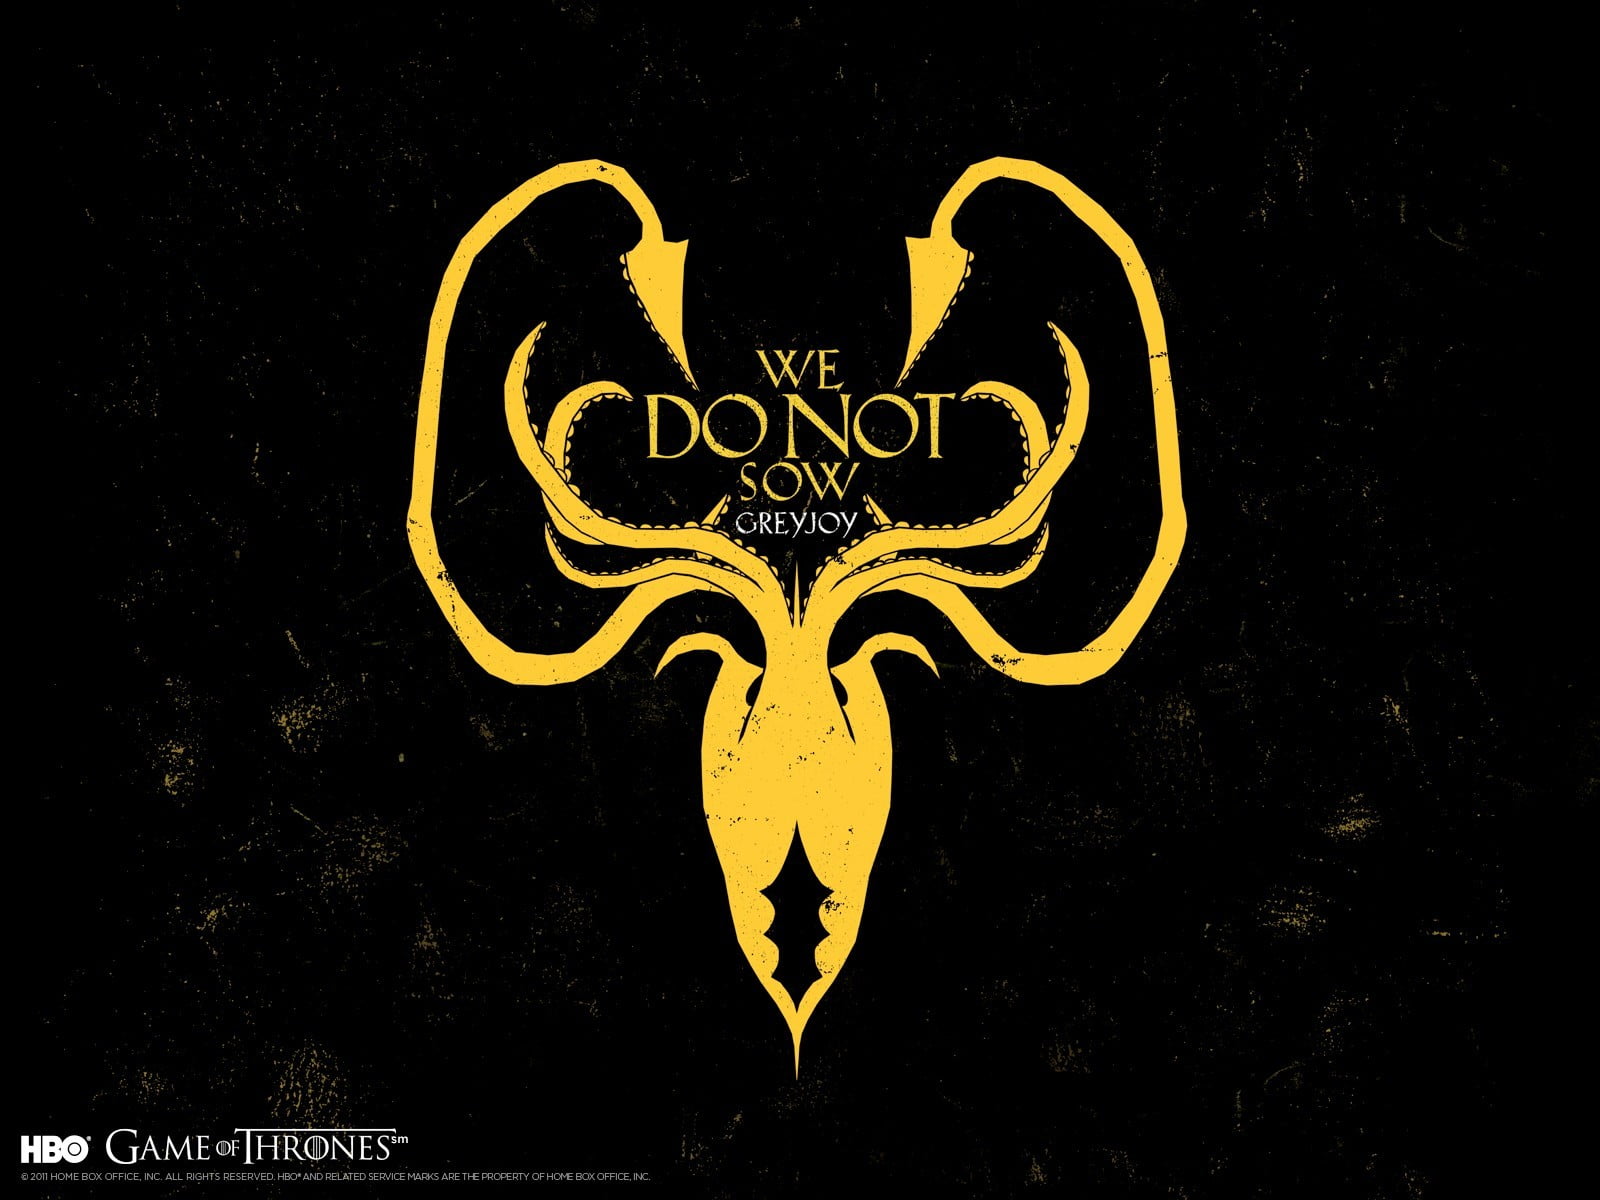 Game of Thrones logo, trone de fer, heroic fantasy, sigils, House Greyjoy